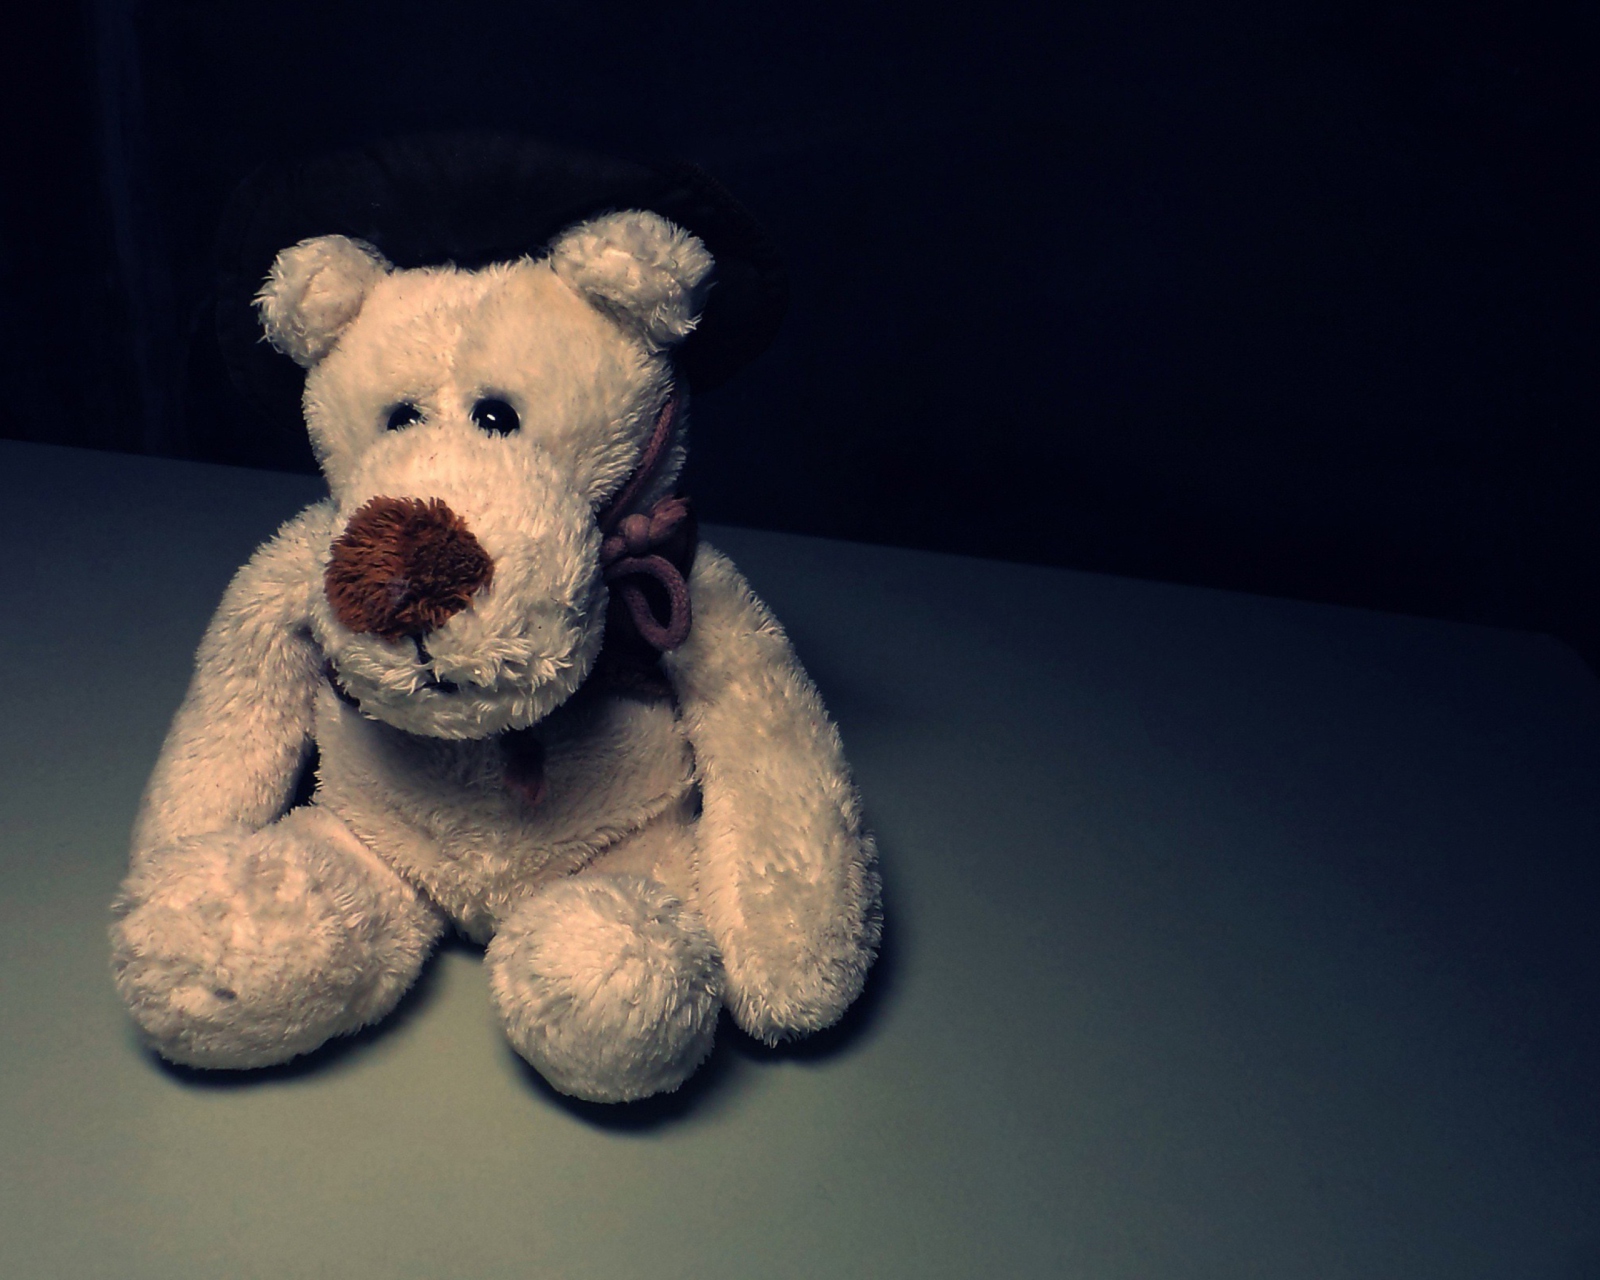 Sad Teddy Bear Sitting Alone wallpaper 1600x1280